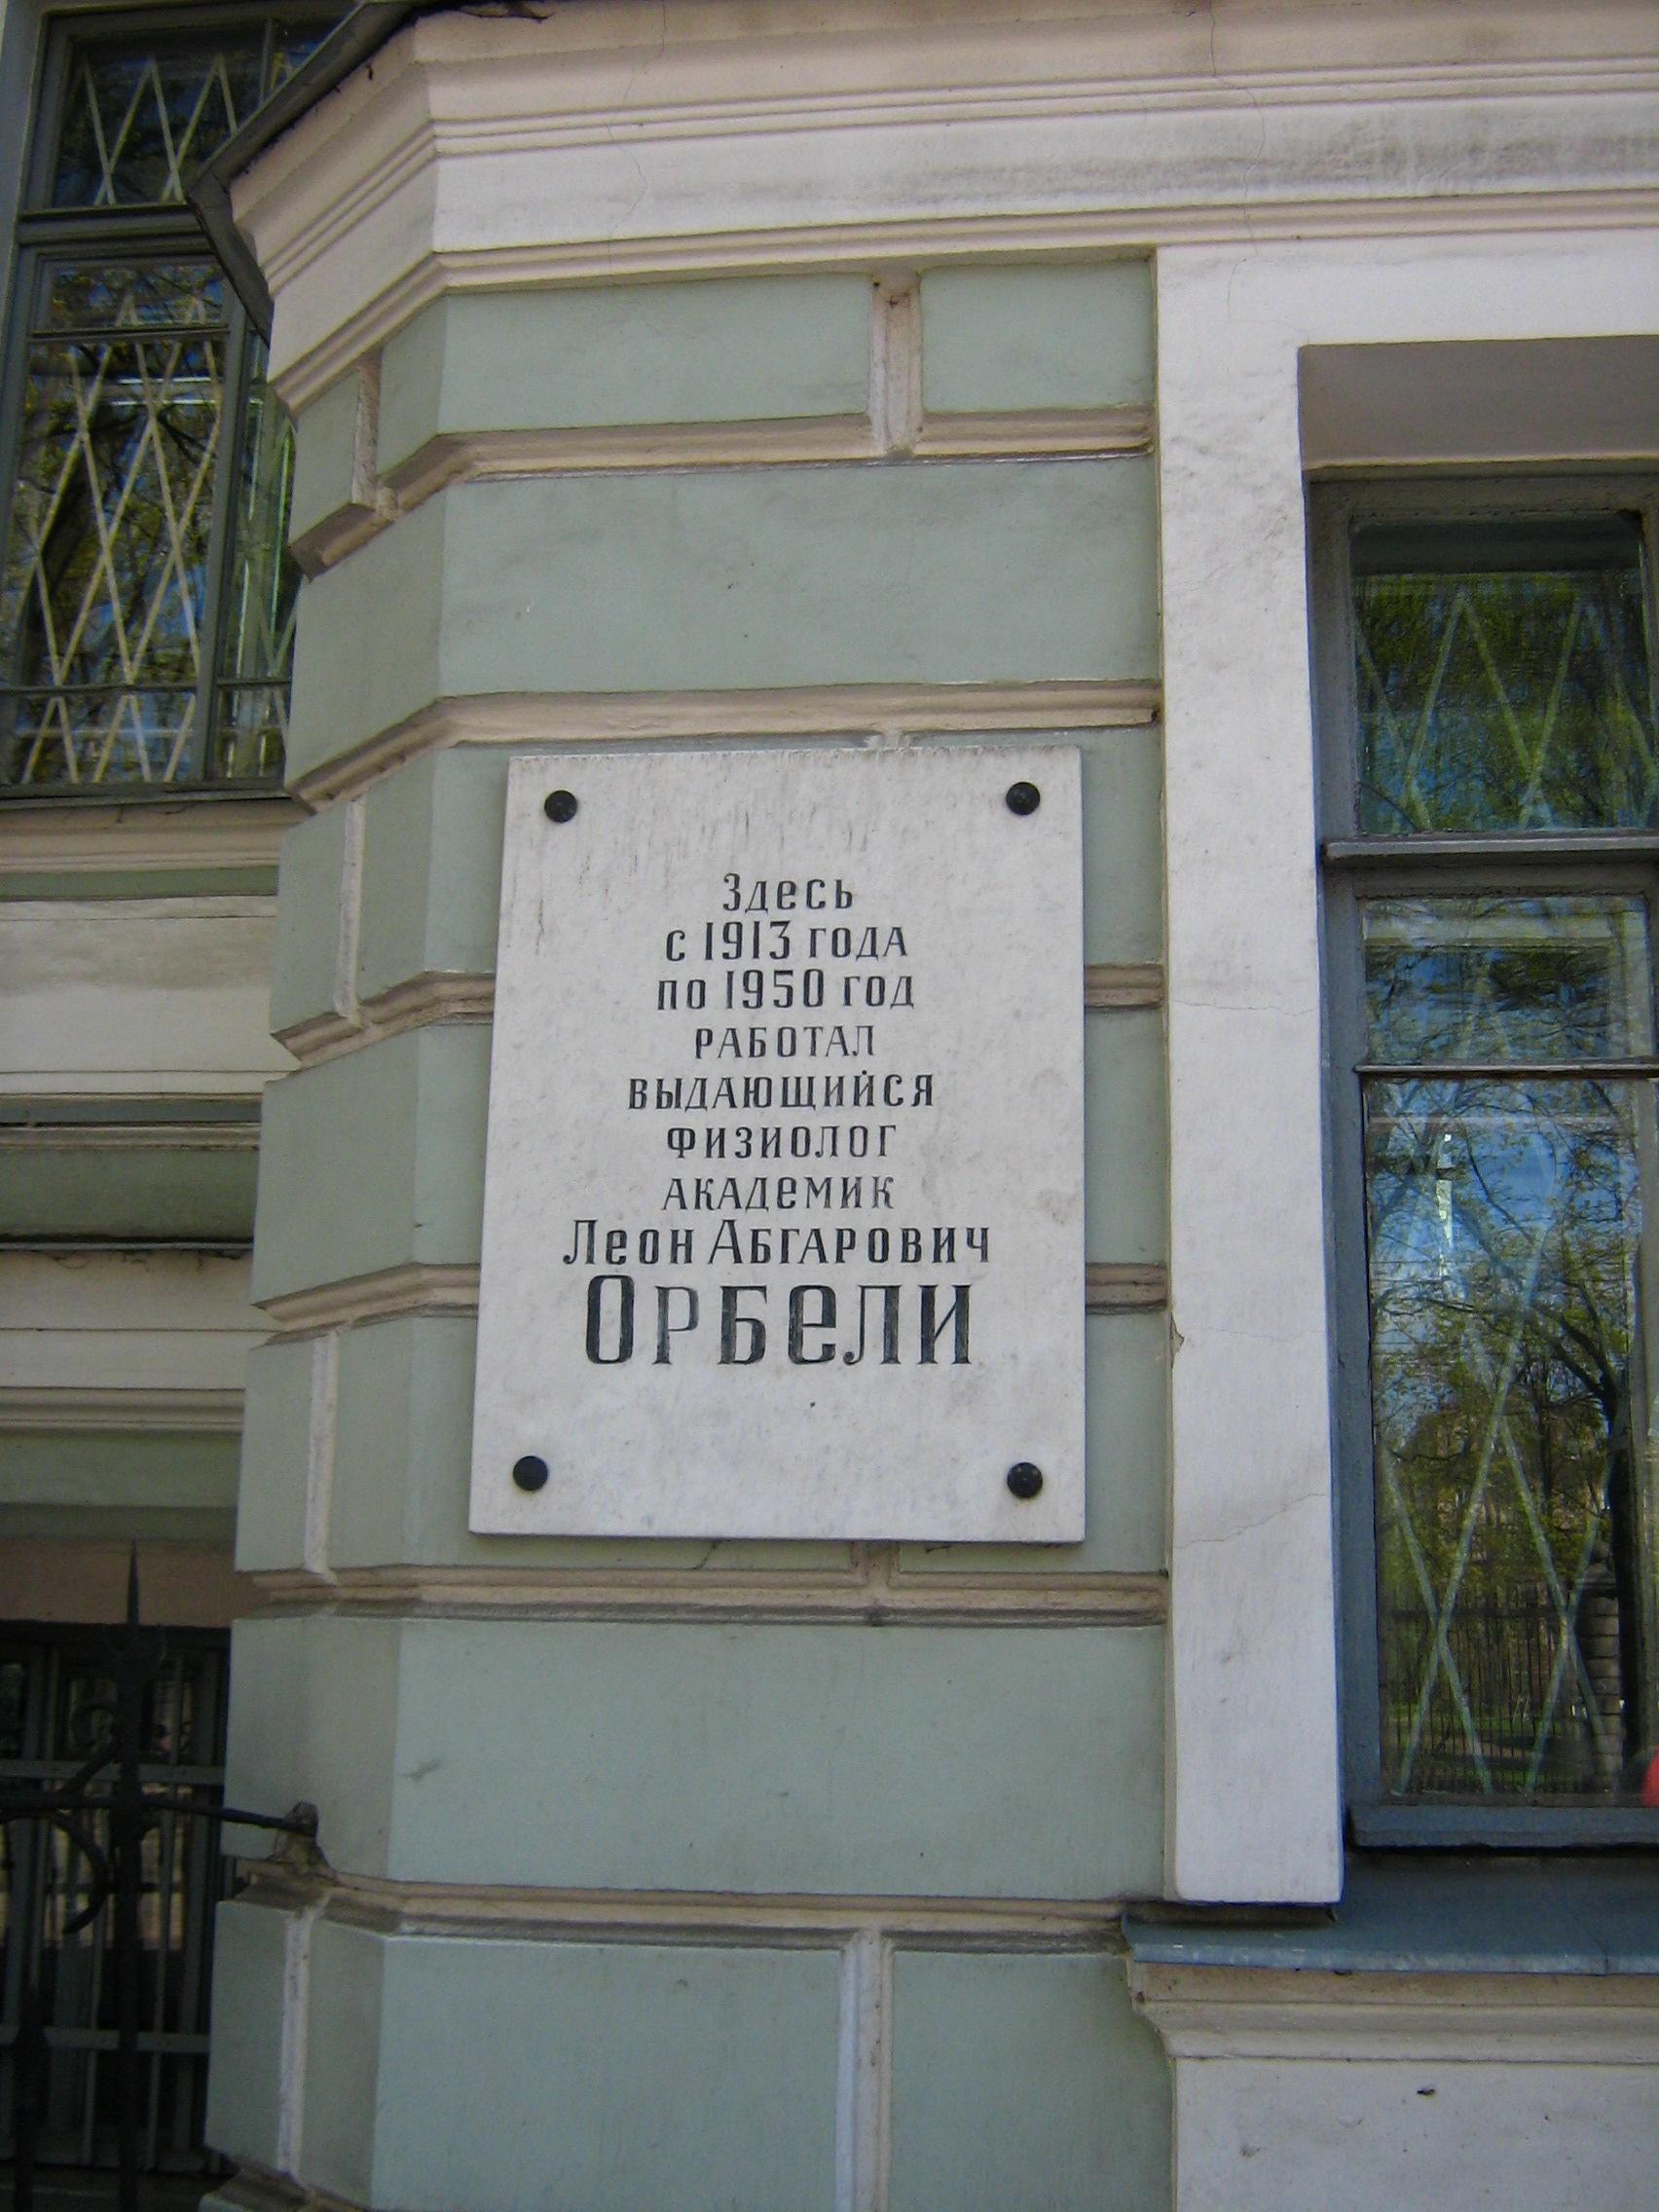 A commemorative plaque to Leon Orbeli in Saint Petersburg